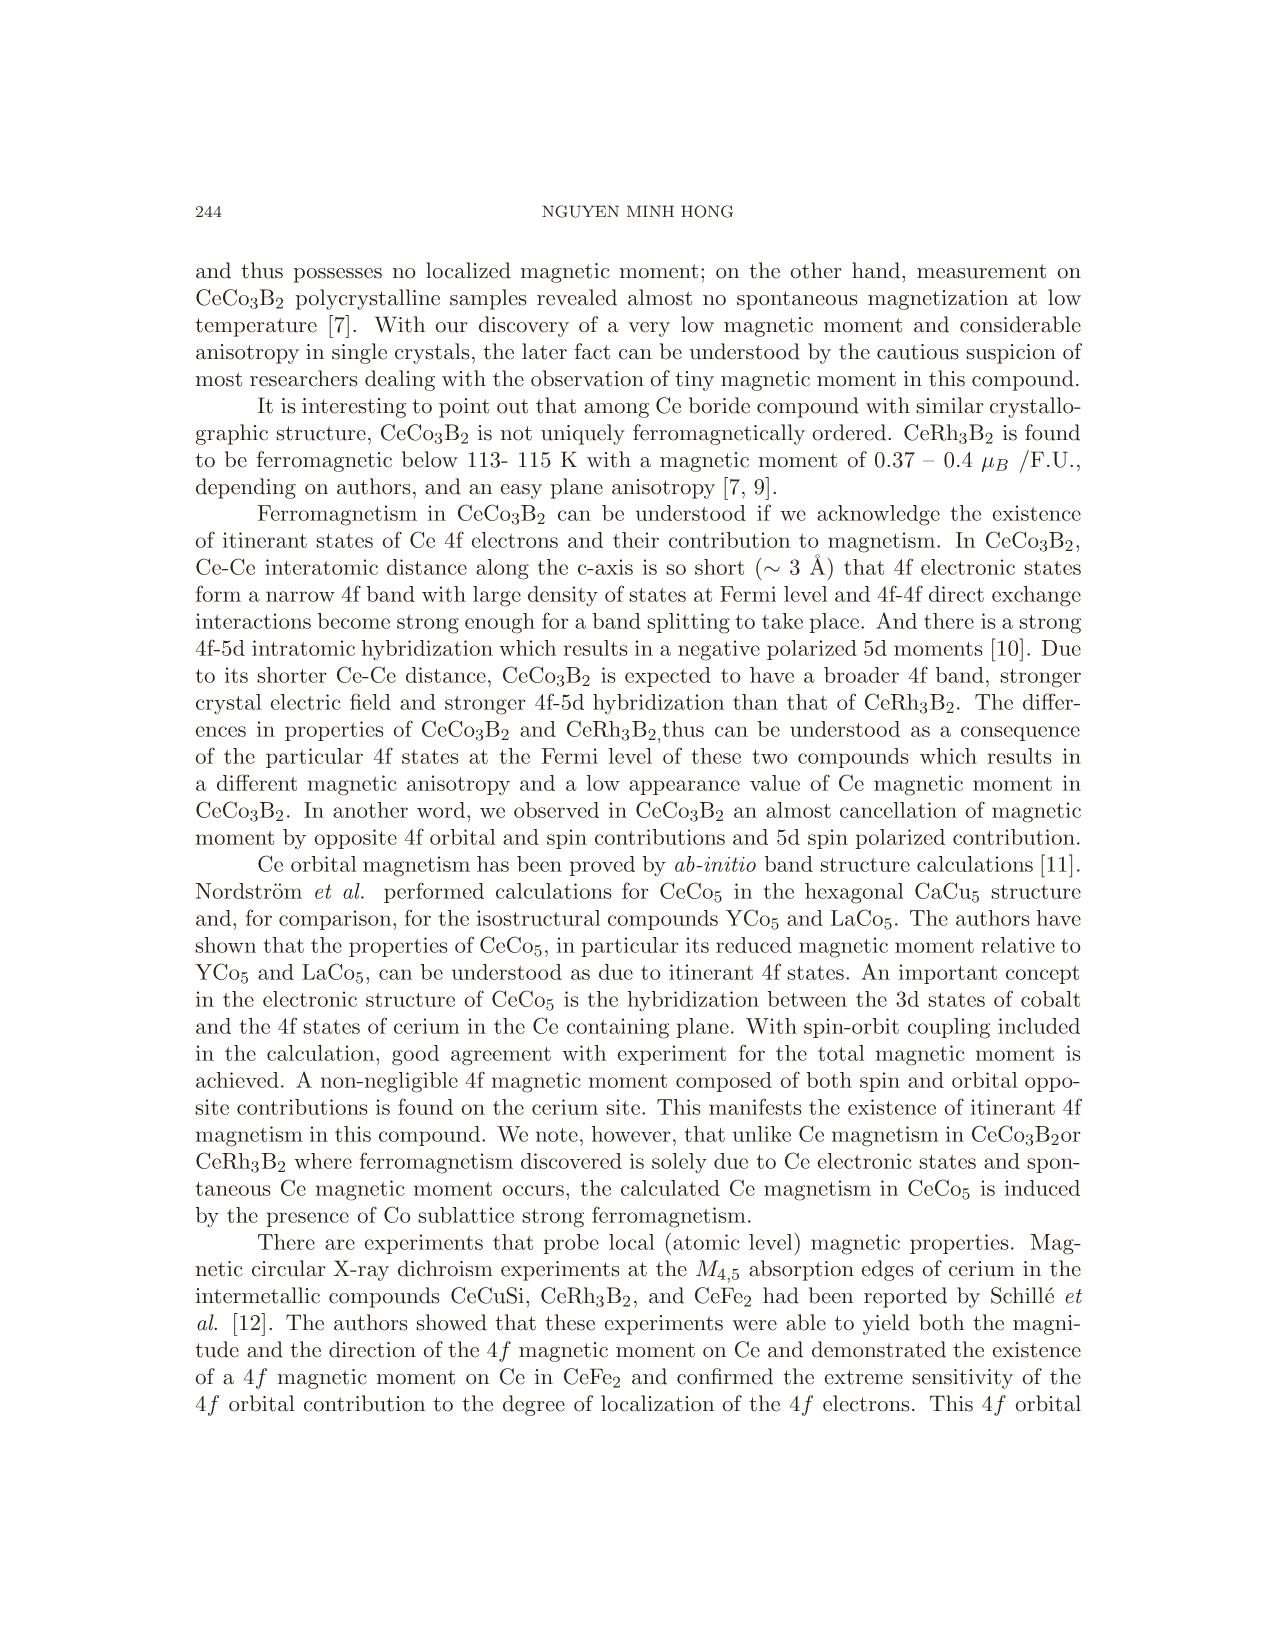 Ferromagnetism in CeCo3B2 trang 4